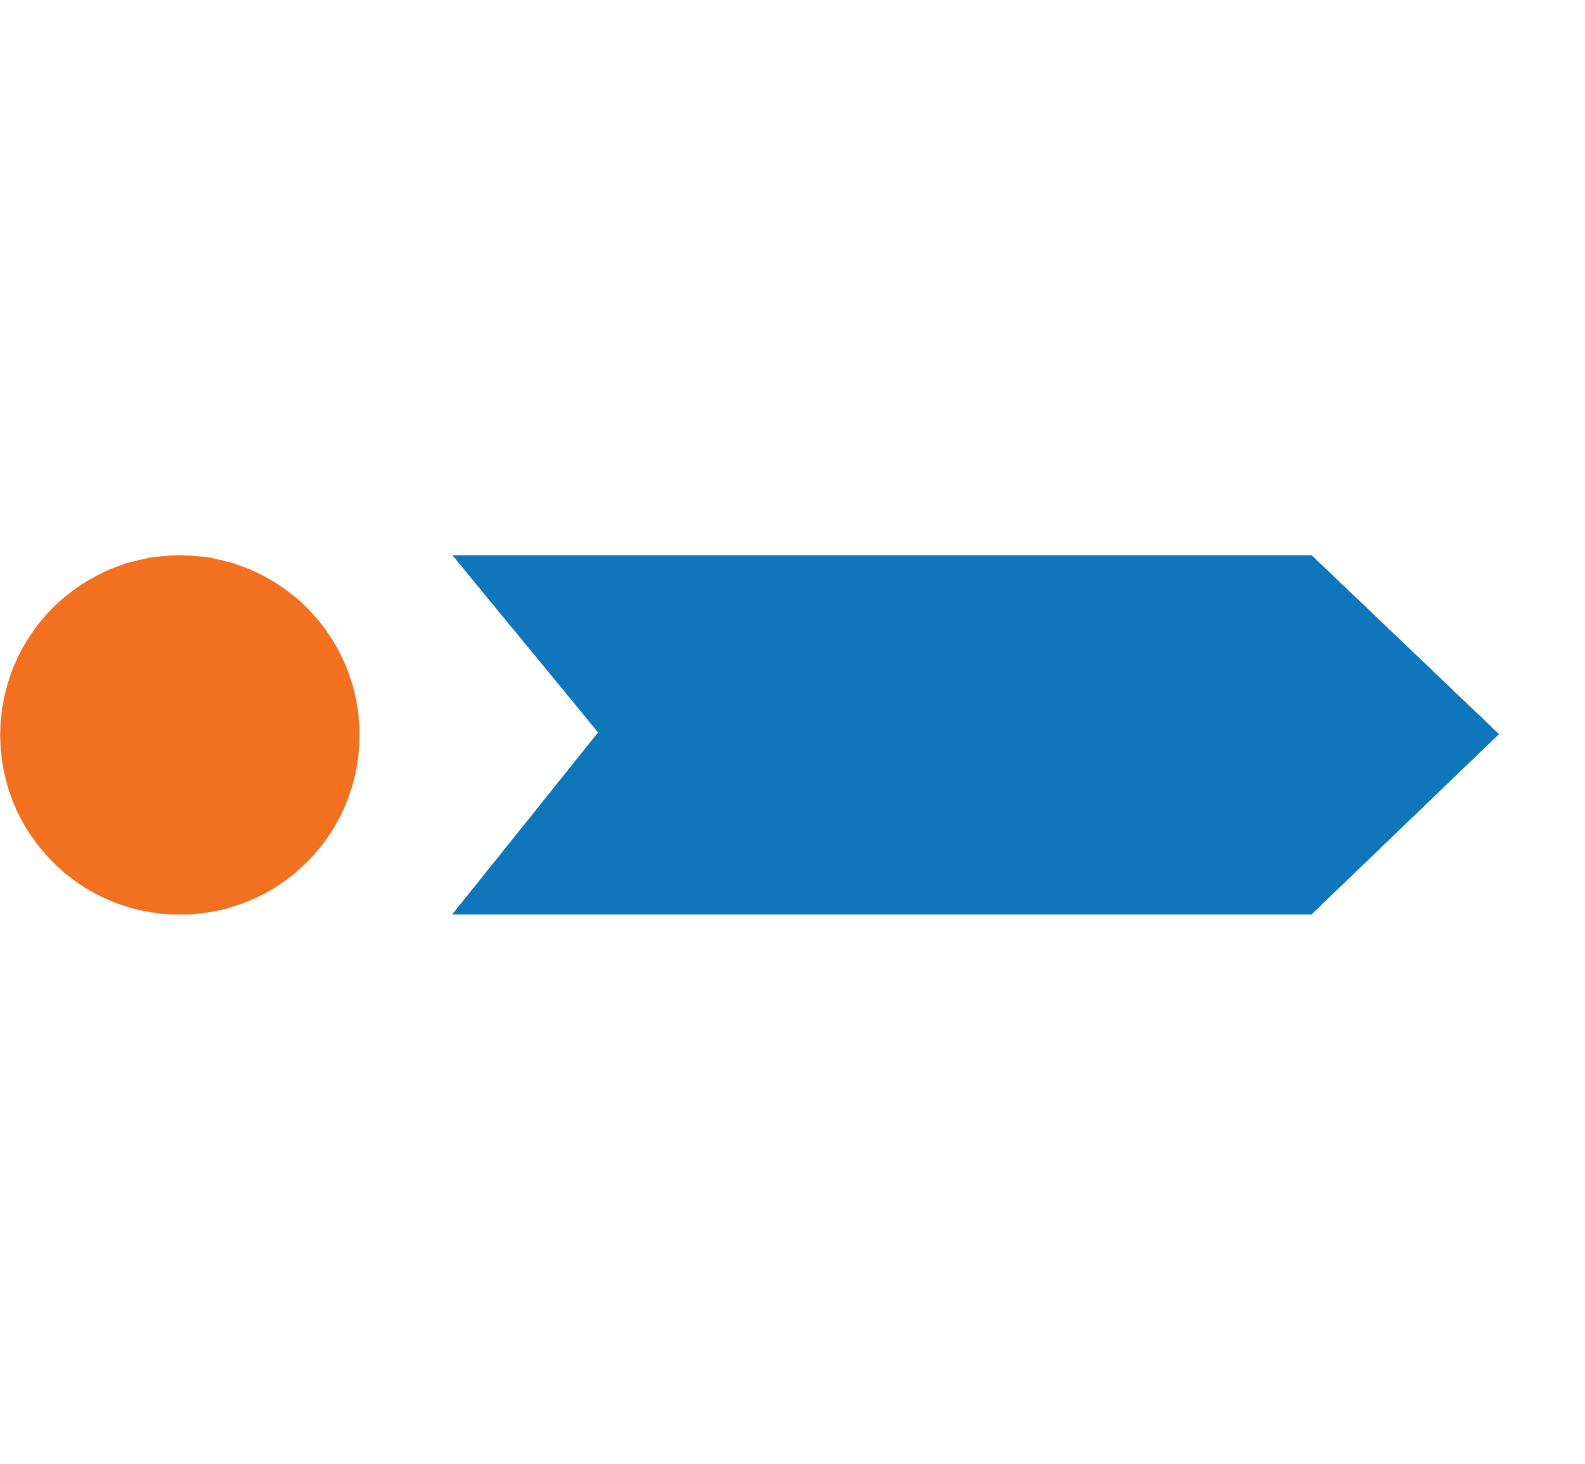 Akero Therapeutics logo for dark backgrounds (transparent PNG)